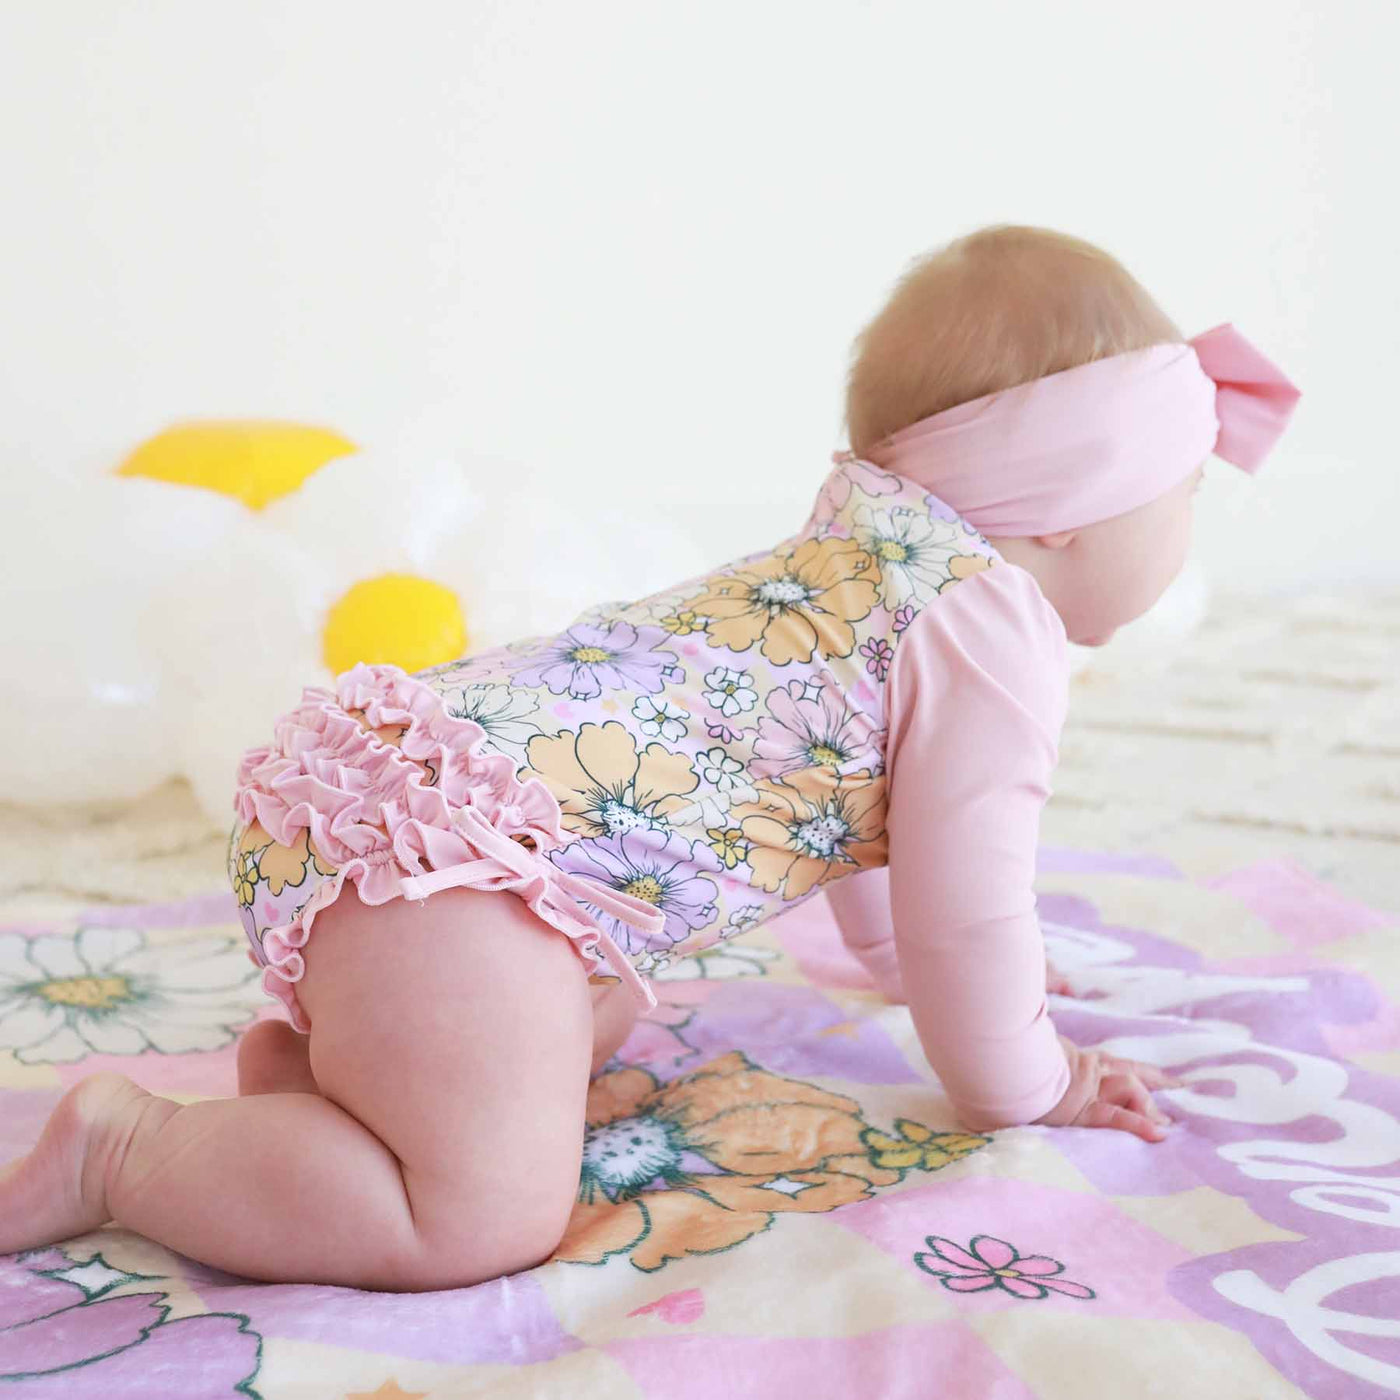 disco daisy ruffle bottom swimsuit for babies upf 50+ sun protection 